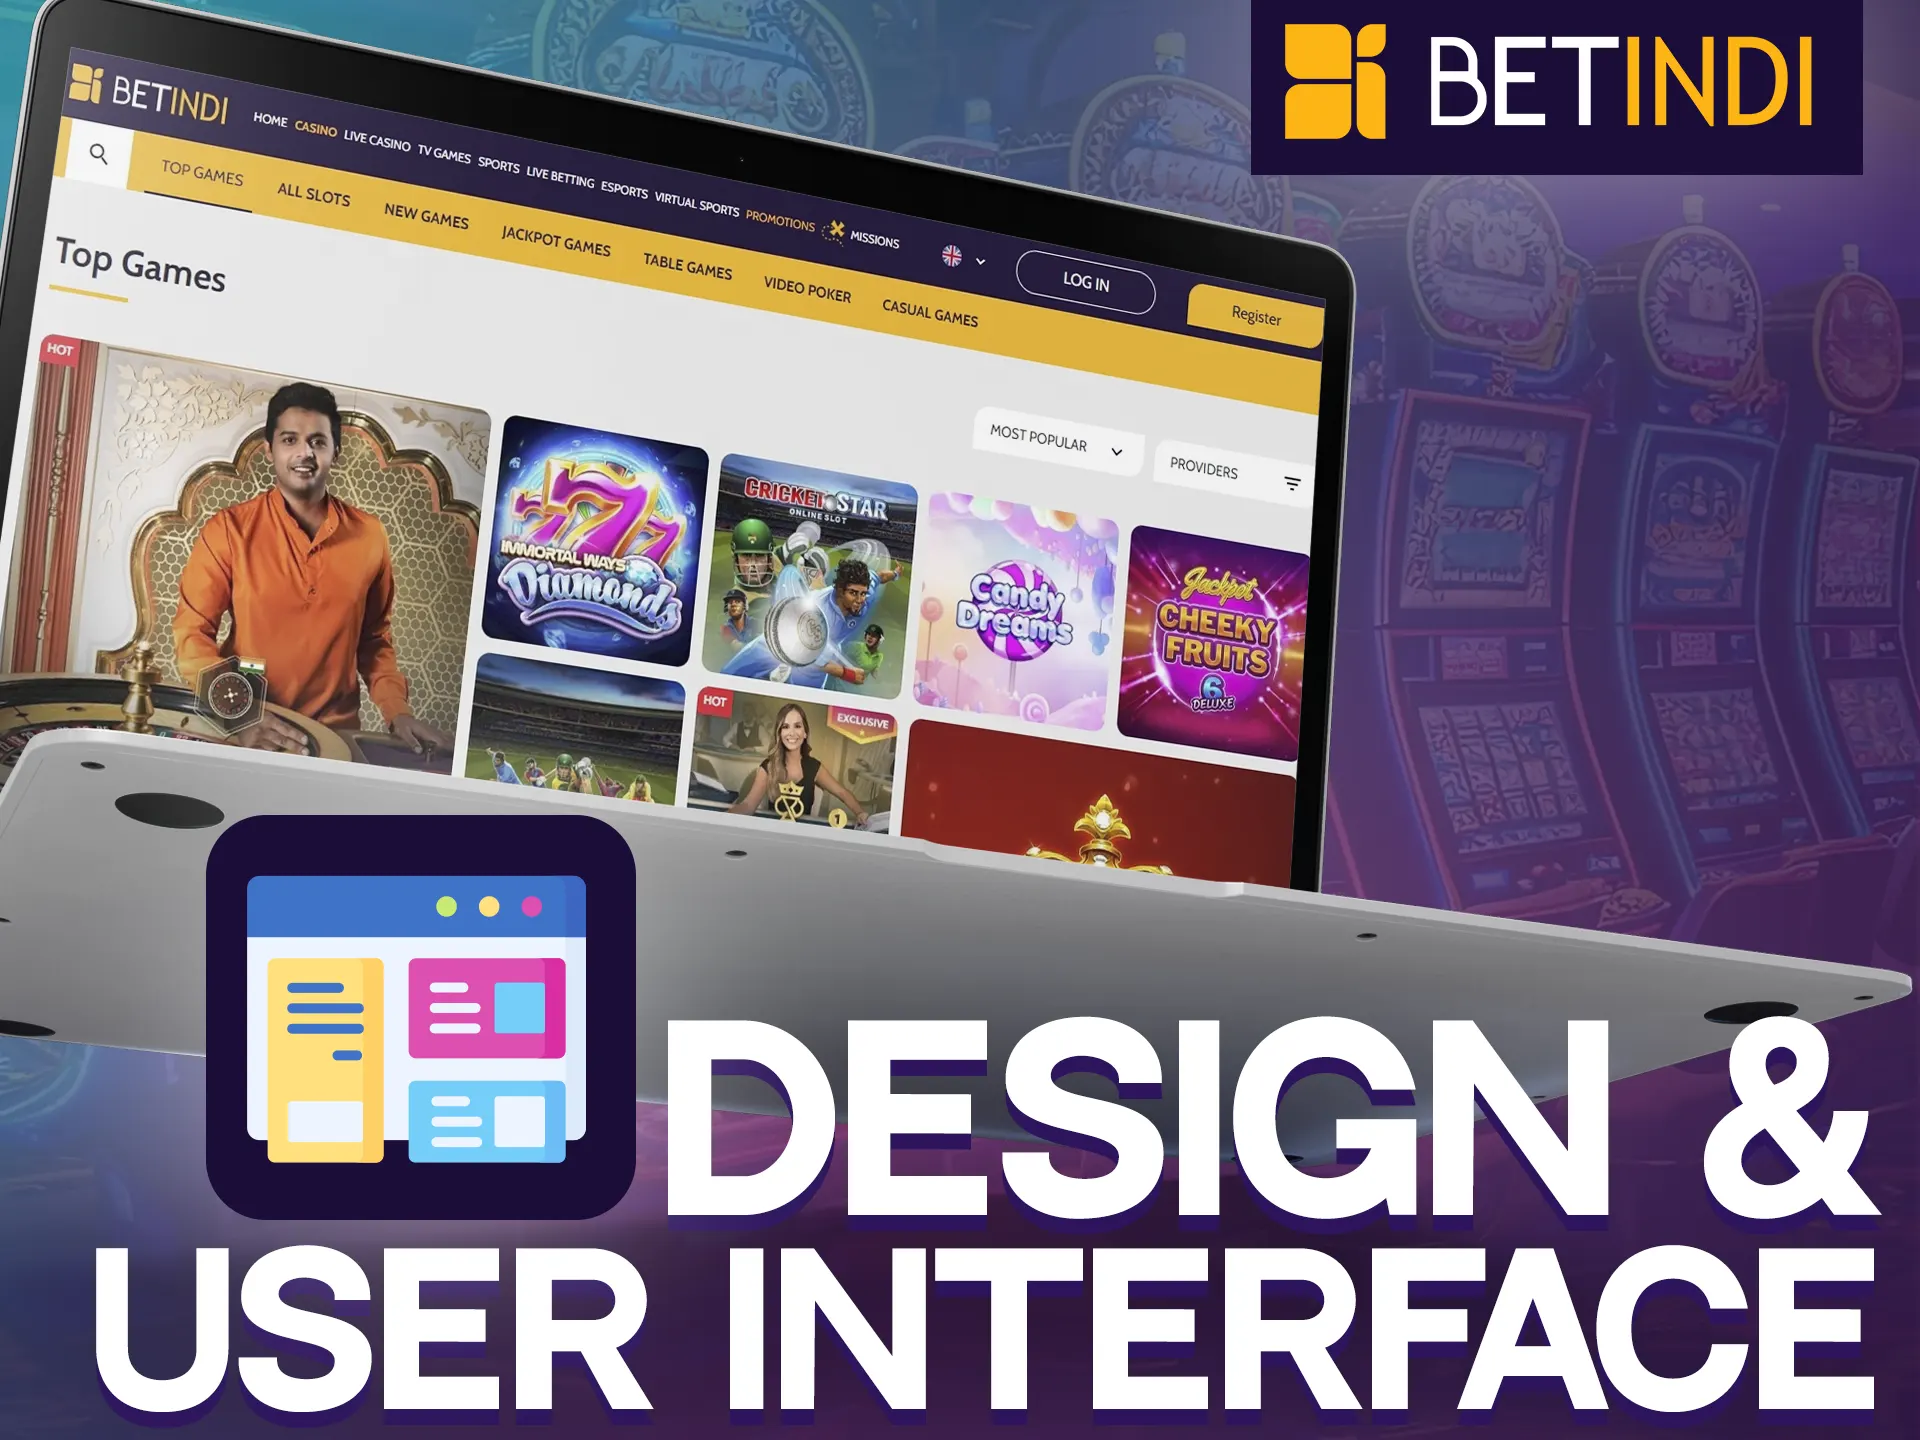 Betindi Casino offers user-friendly design and interface.